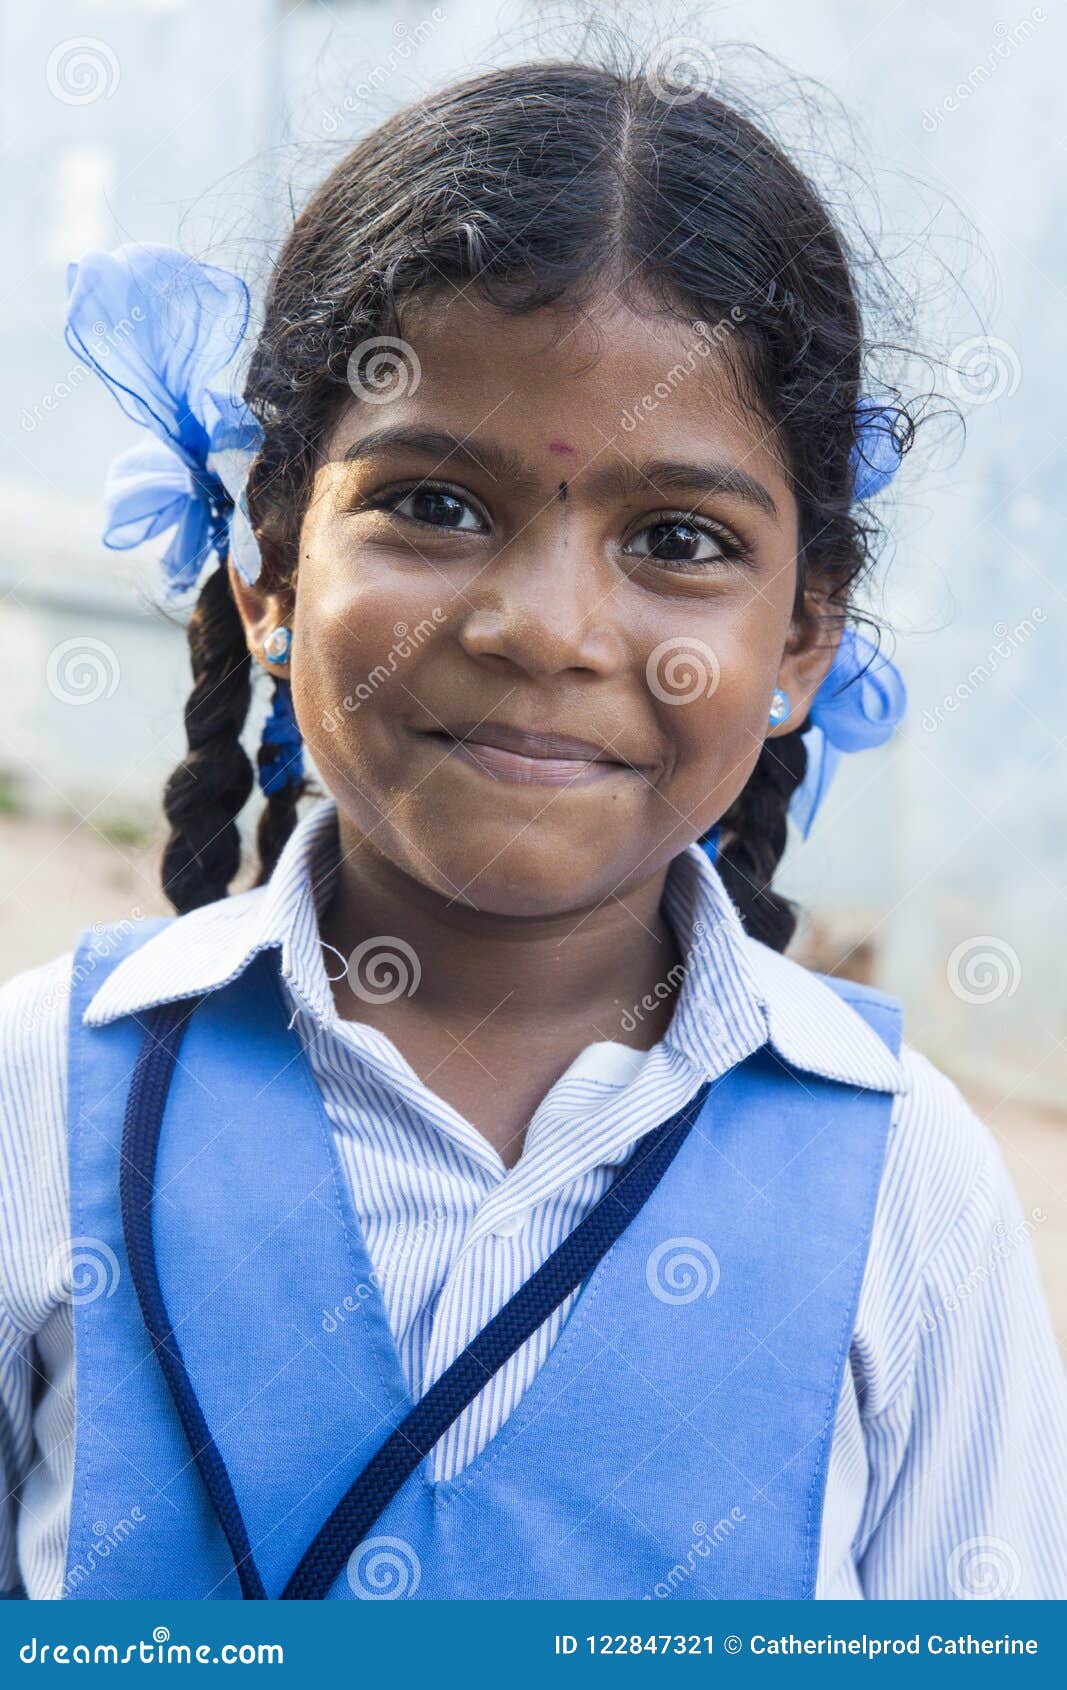 447 Tamil Nadu Village Girl Stock Photos - Free & Royalty-Free Stock Photos  from Dreamstime